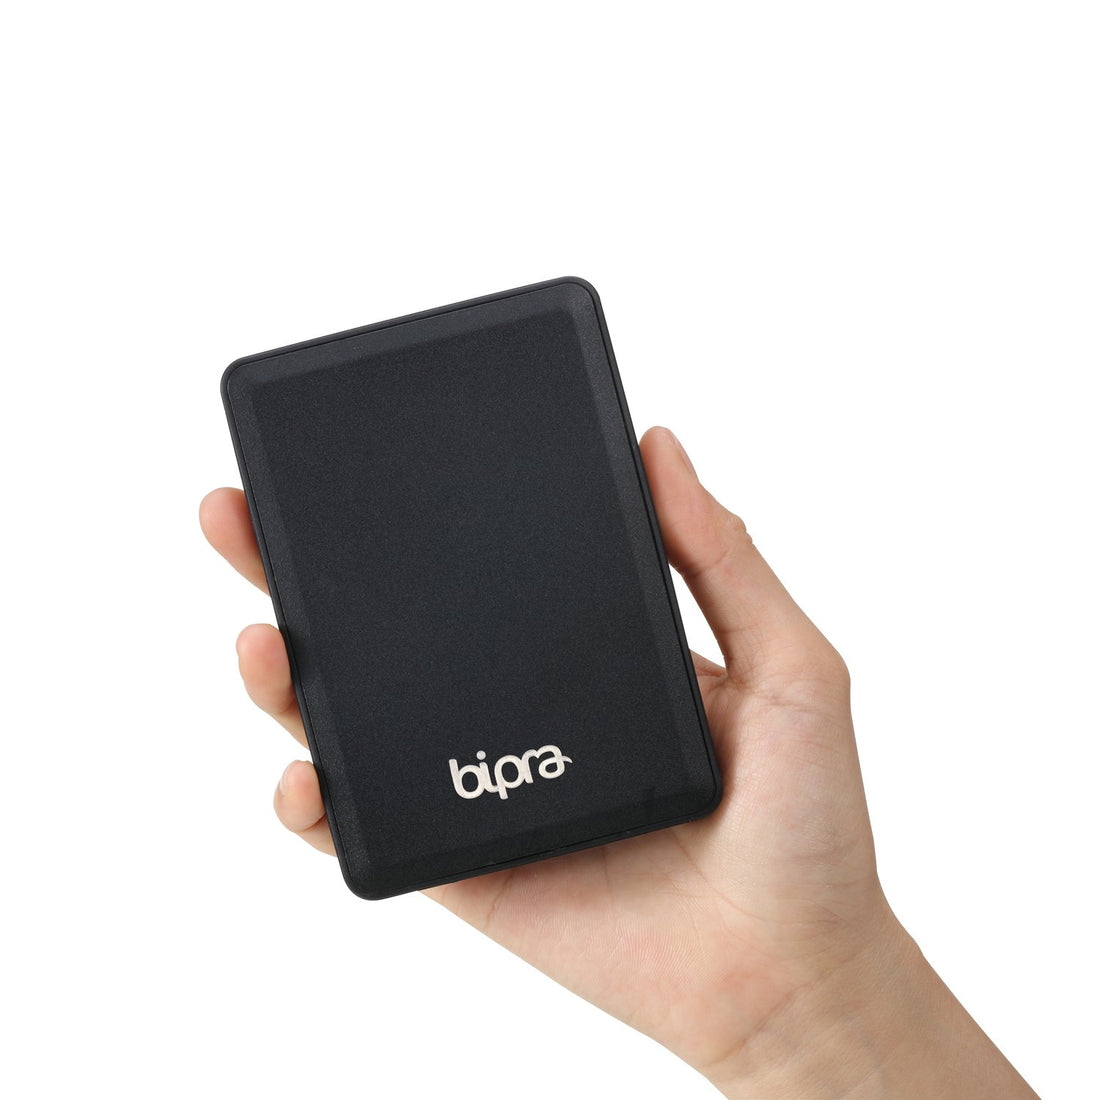 Bipra S3 2.5 inch USB 3.0 NTFS Portable External Hard Drive - Black (1TB 1000GB)